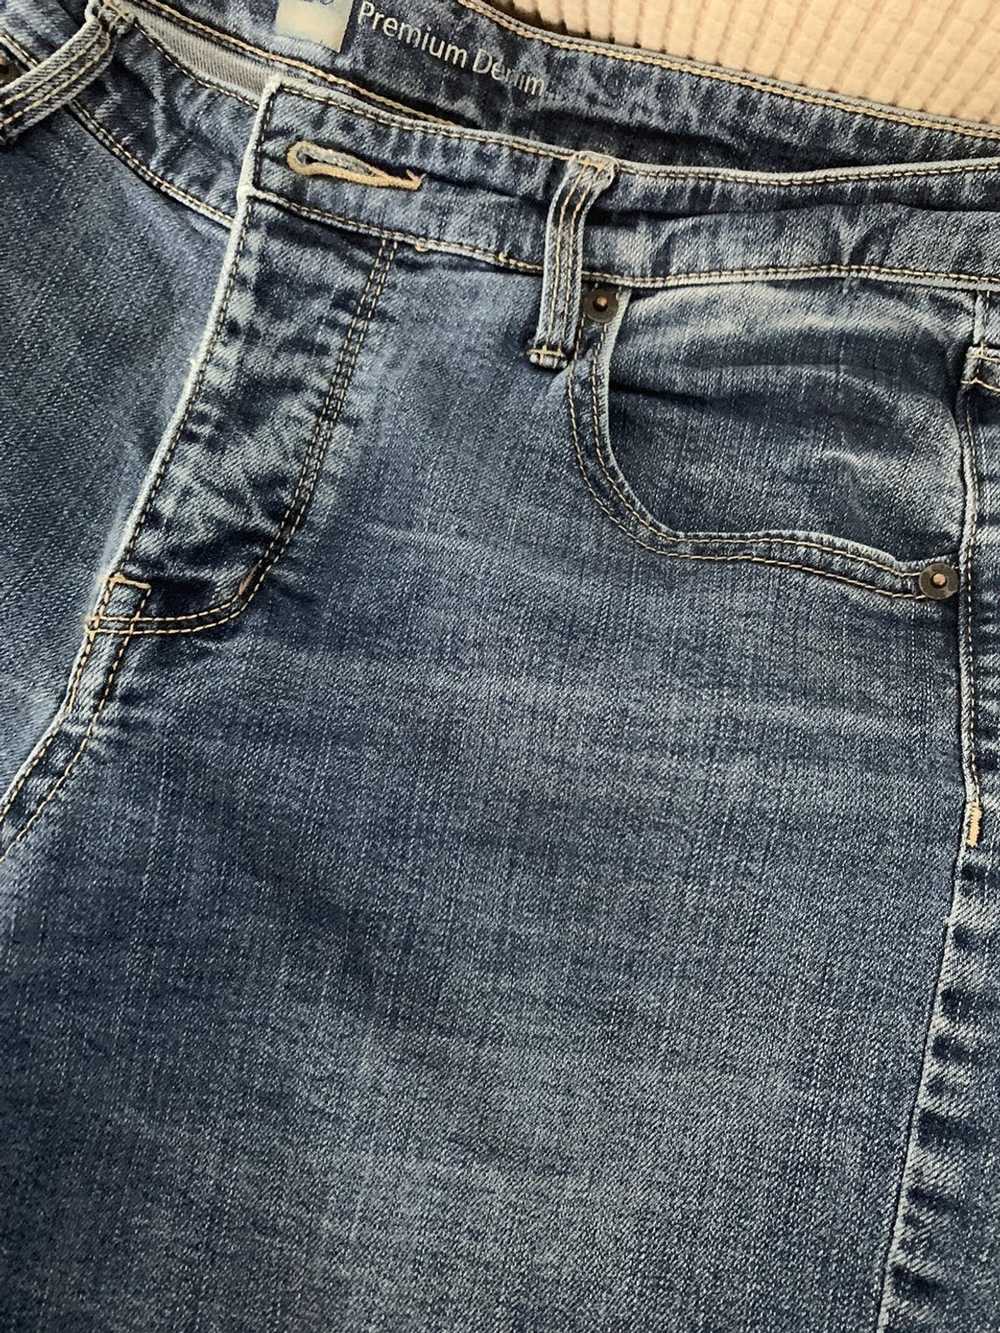 Other Shorts Premium Denim Size 10 - image 2